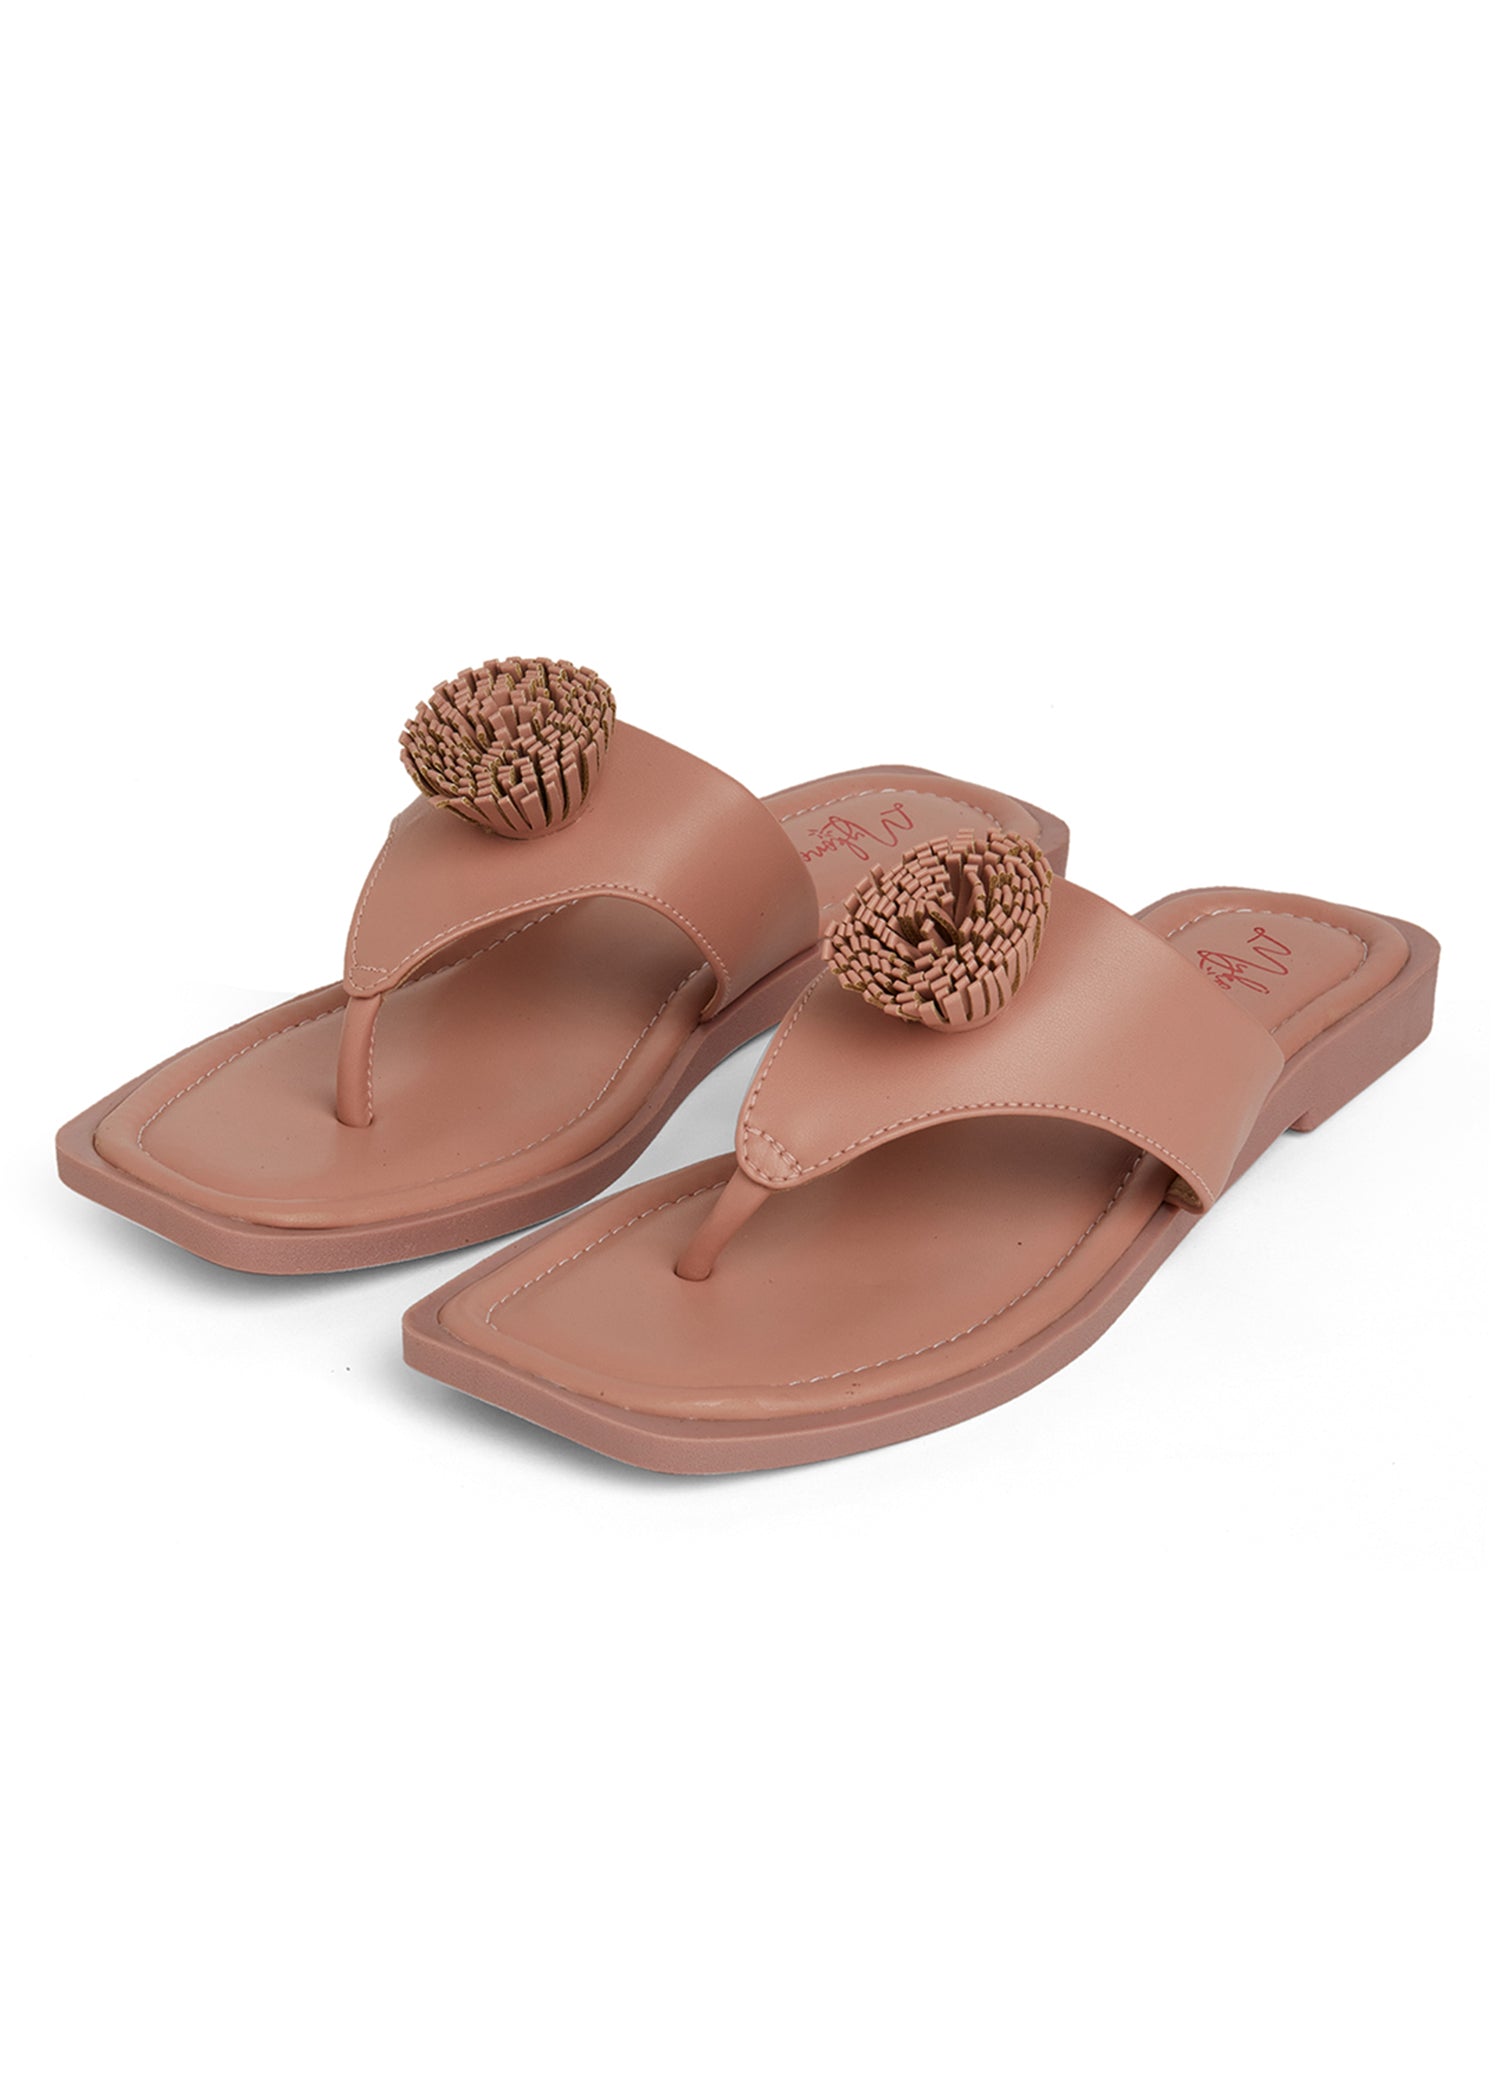 Women's Flat Sandals | Naturalizer.com